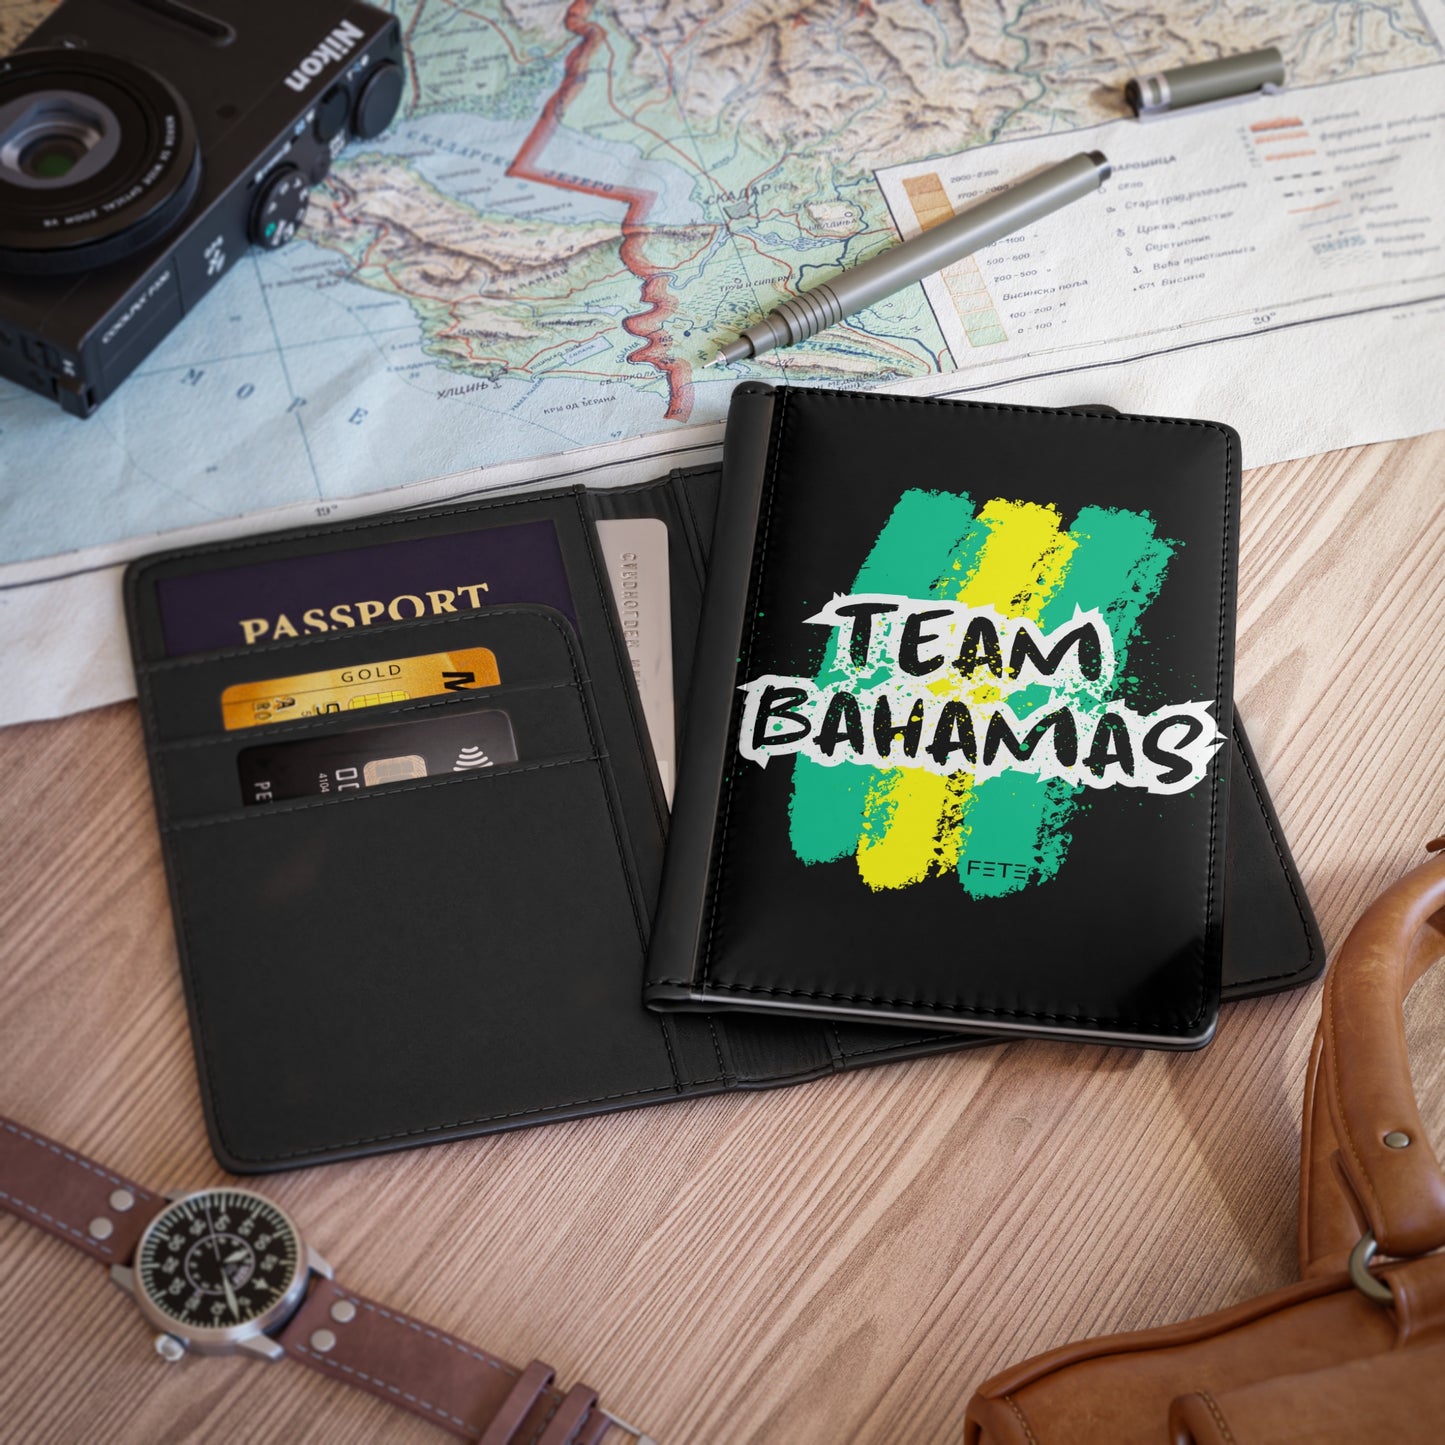 Team Bahamas Passport Cover